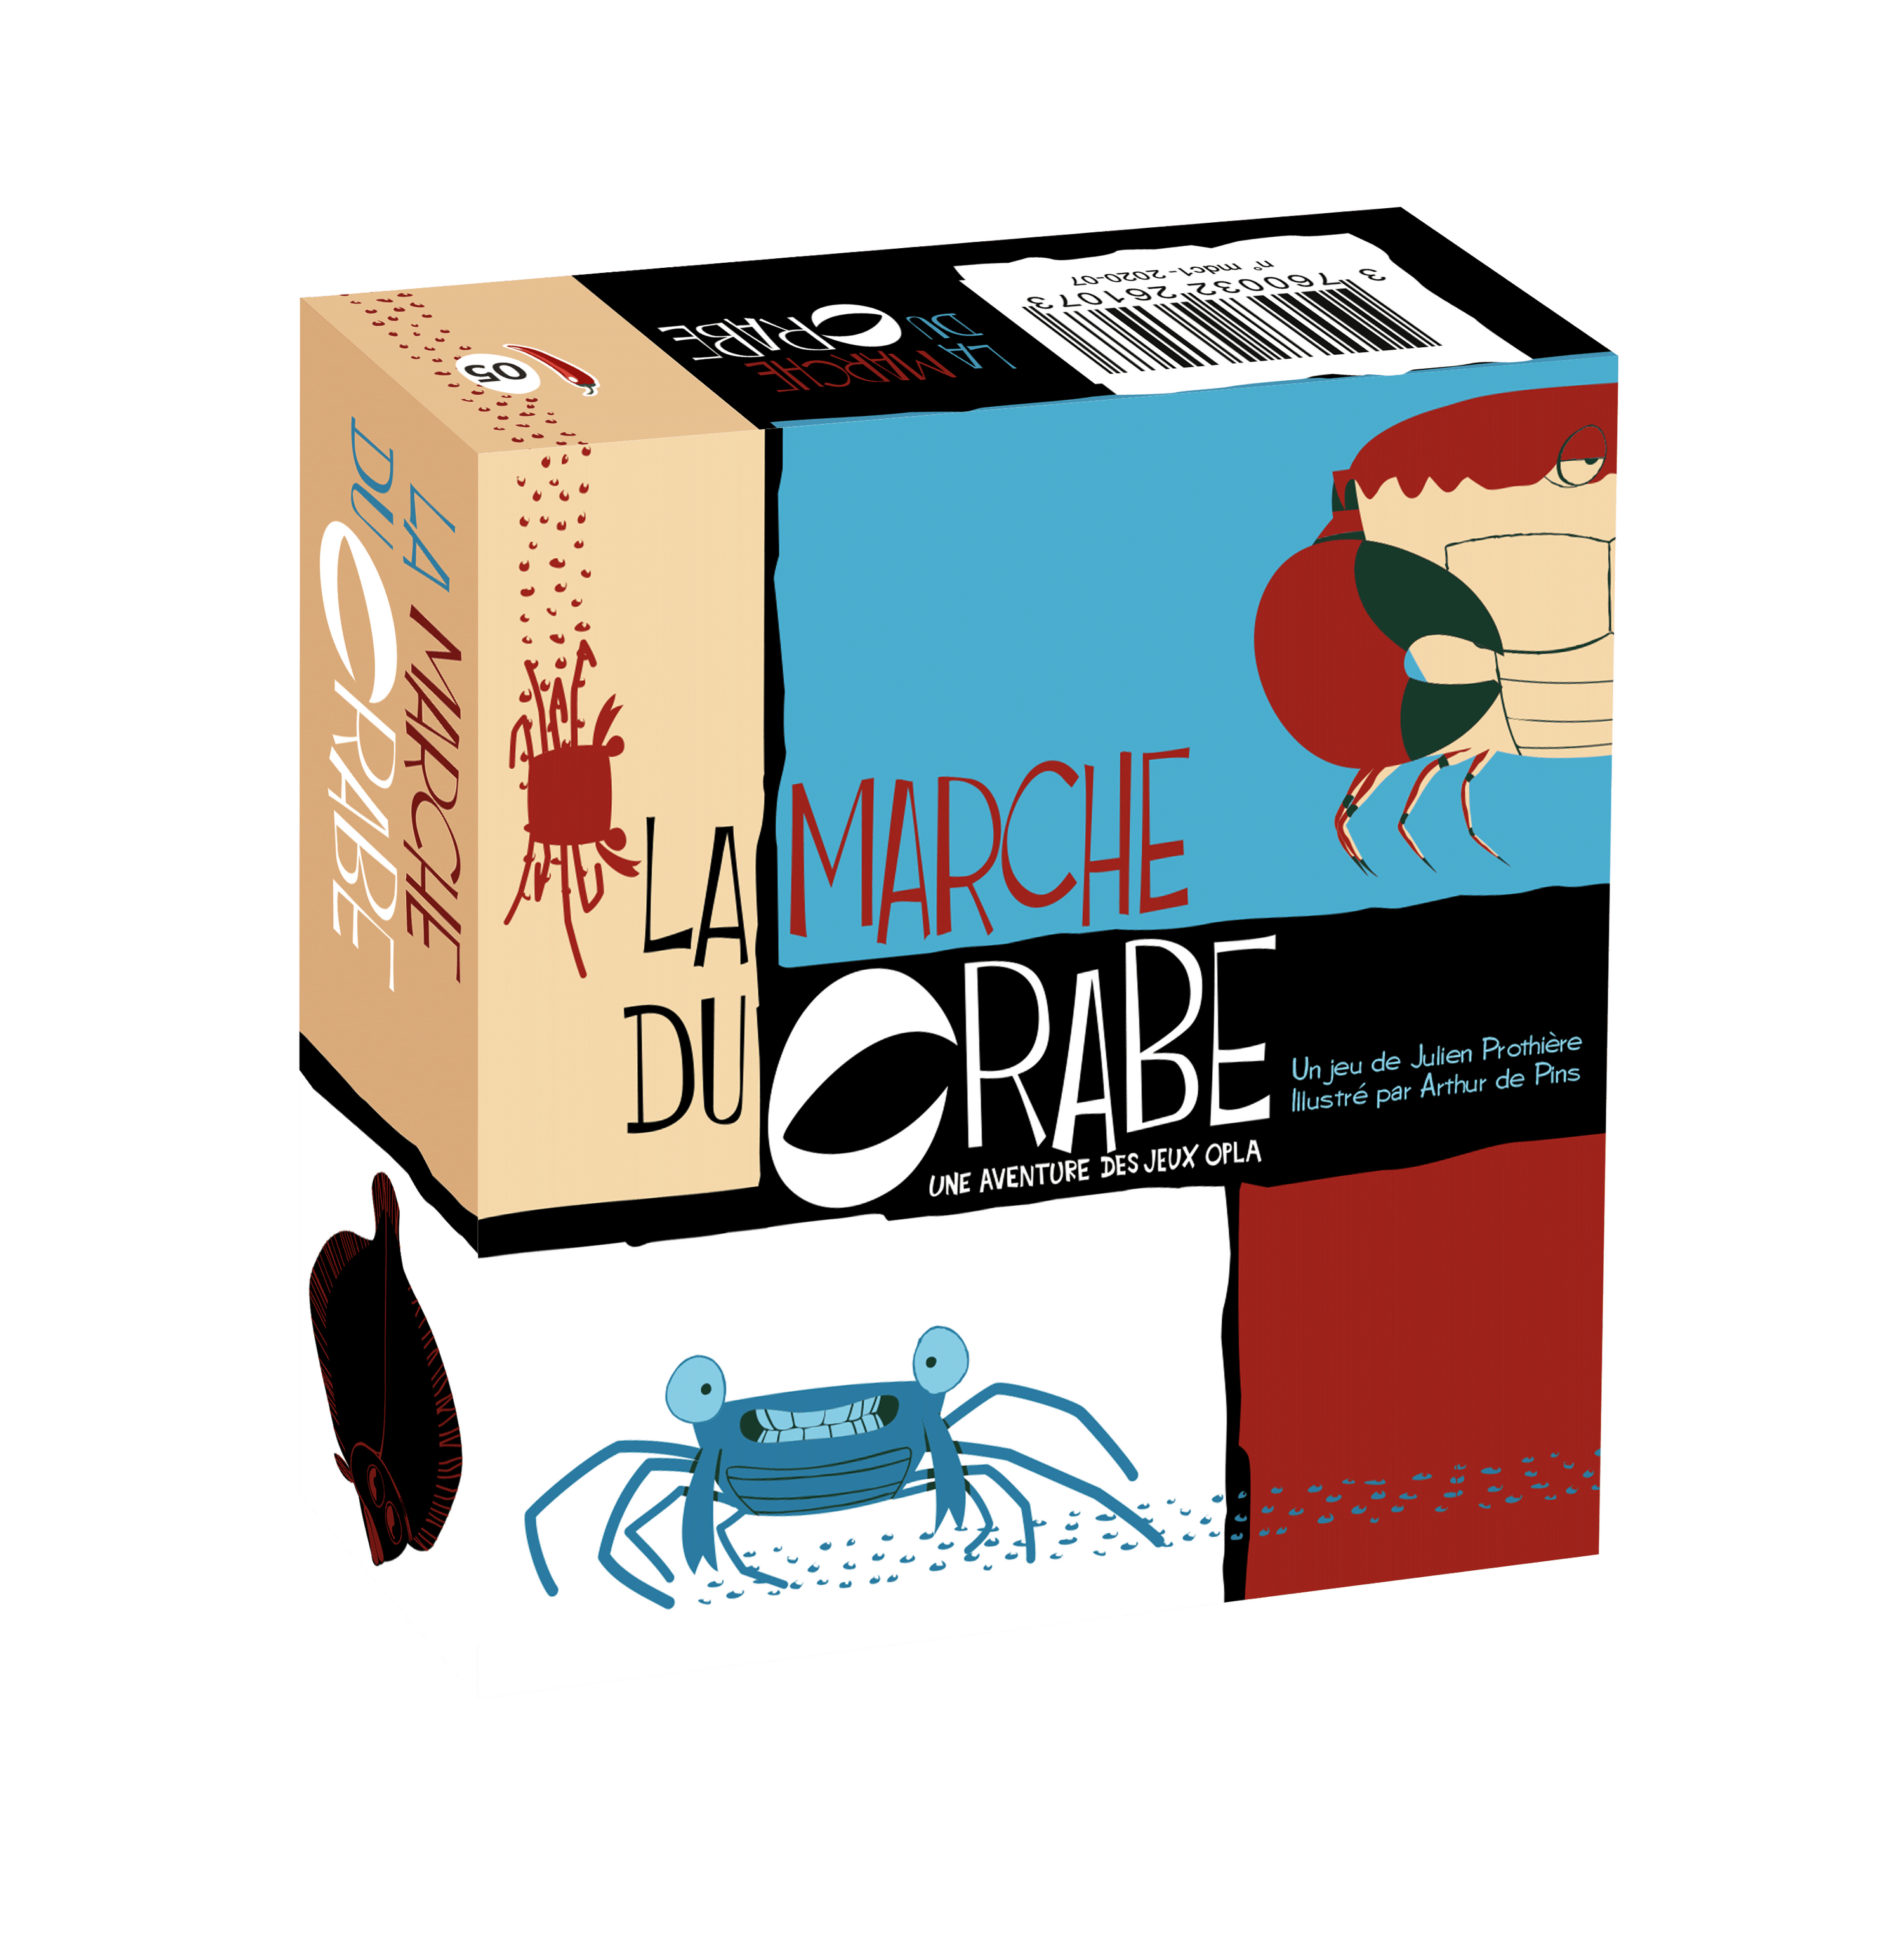 La marche du crabe - Made in France - Jeux Opla